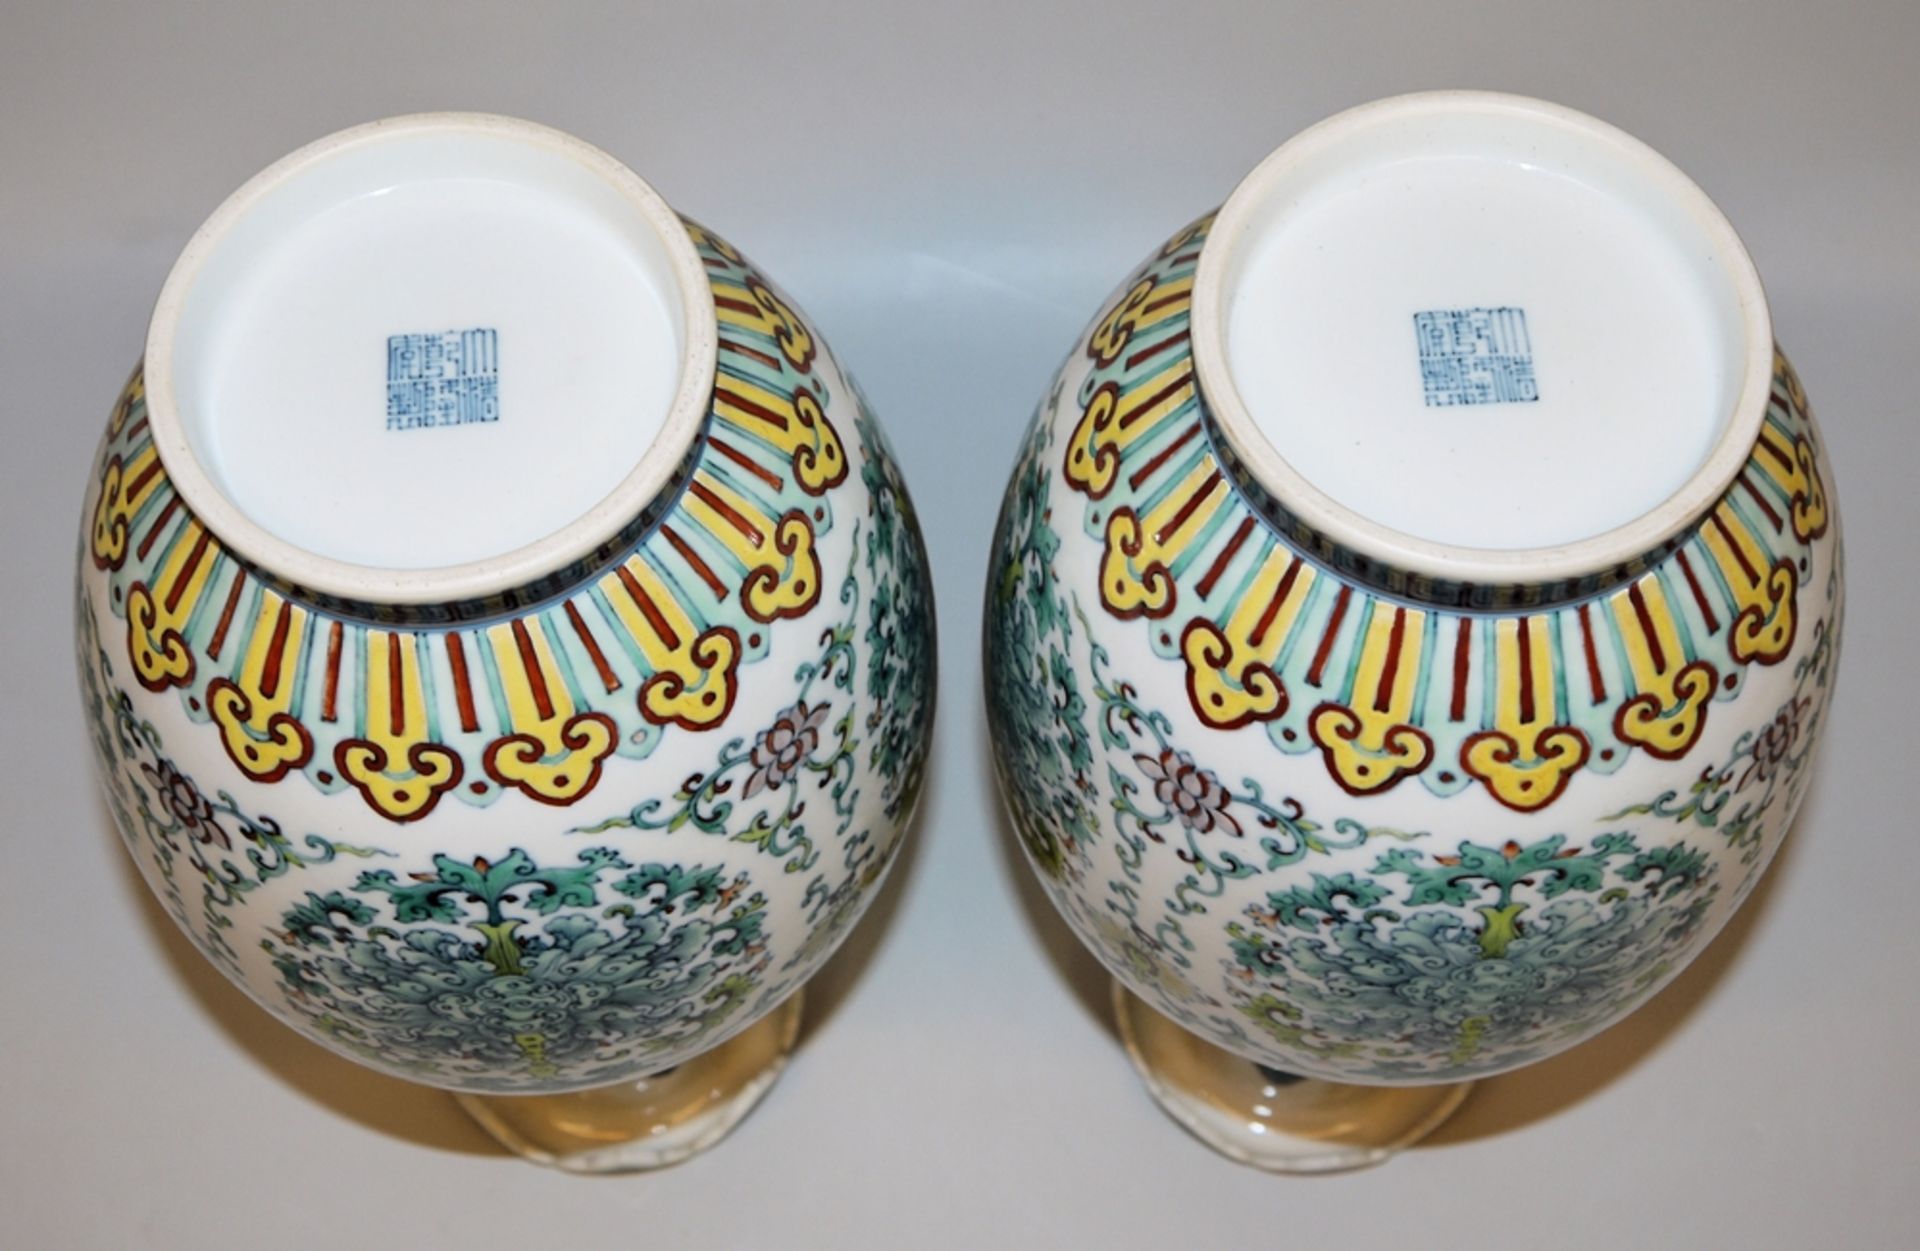 Exquisite pair of doucai vases, probably Republic period, China 20th century  - Image 3 of 3